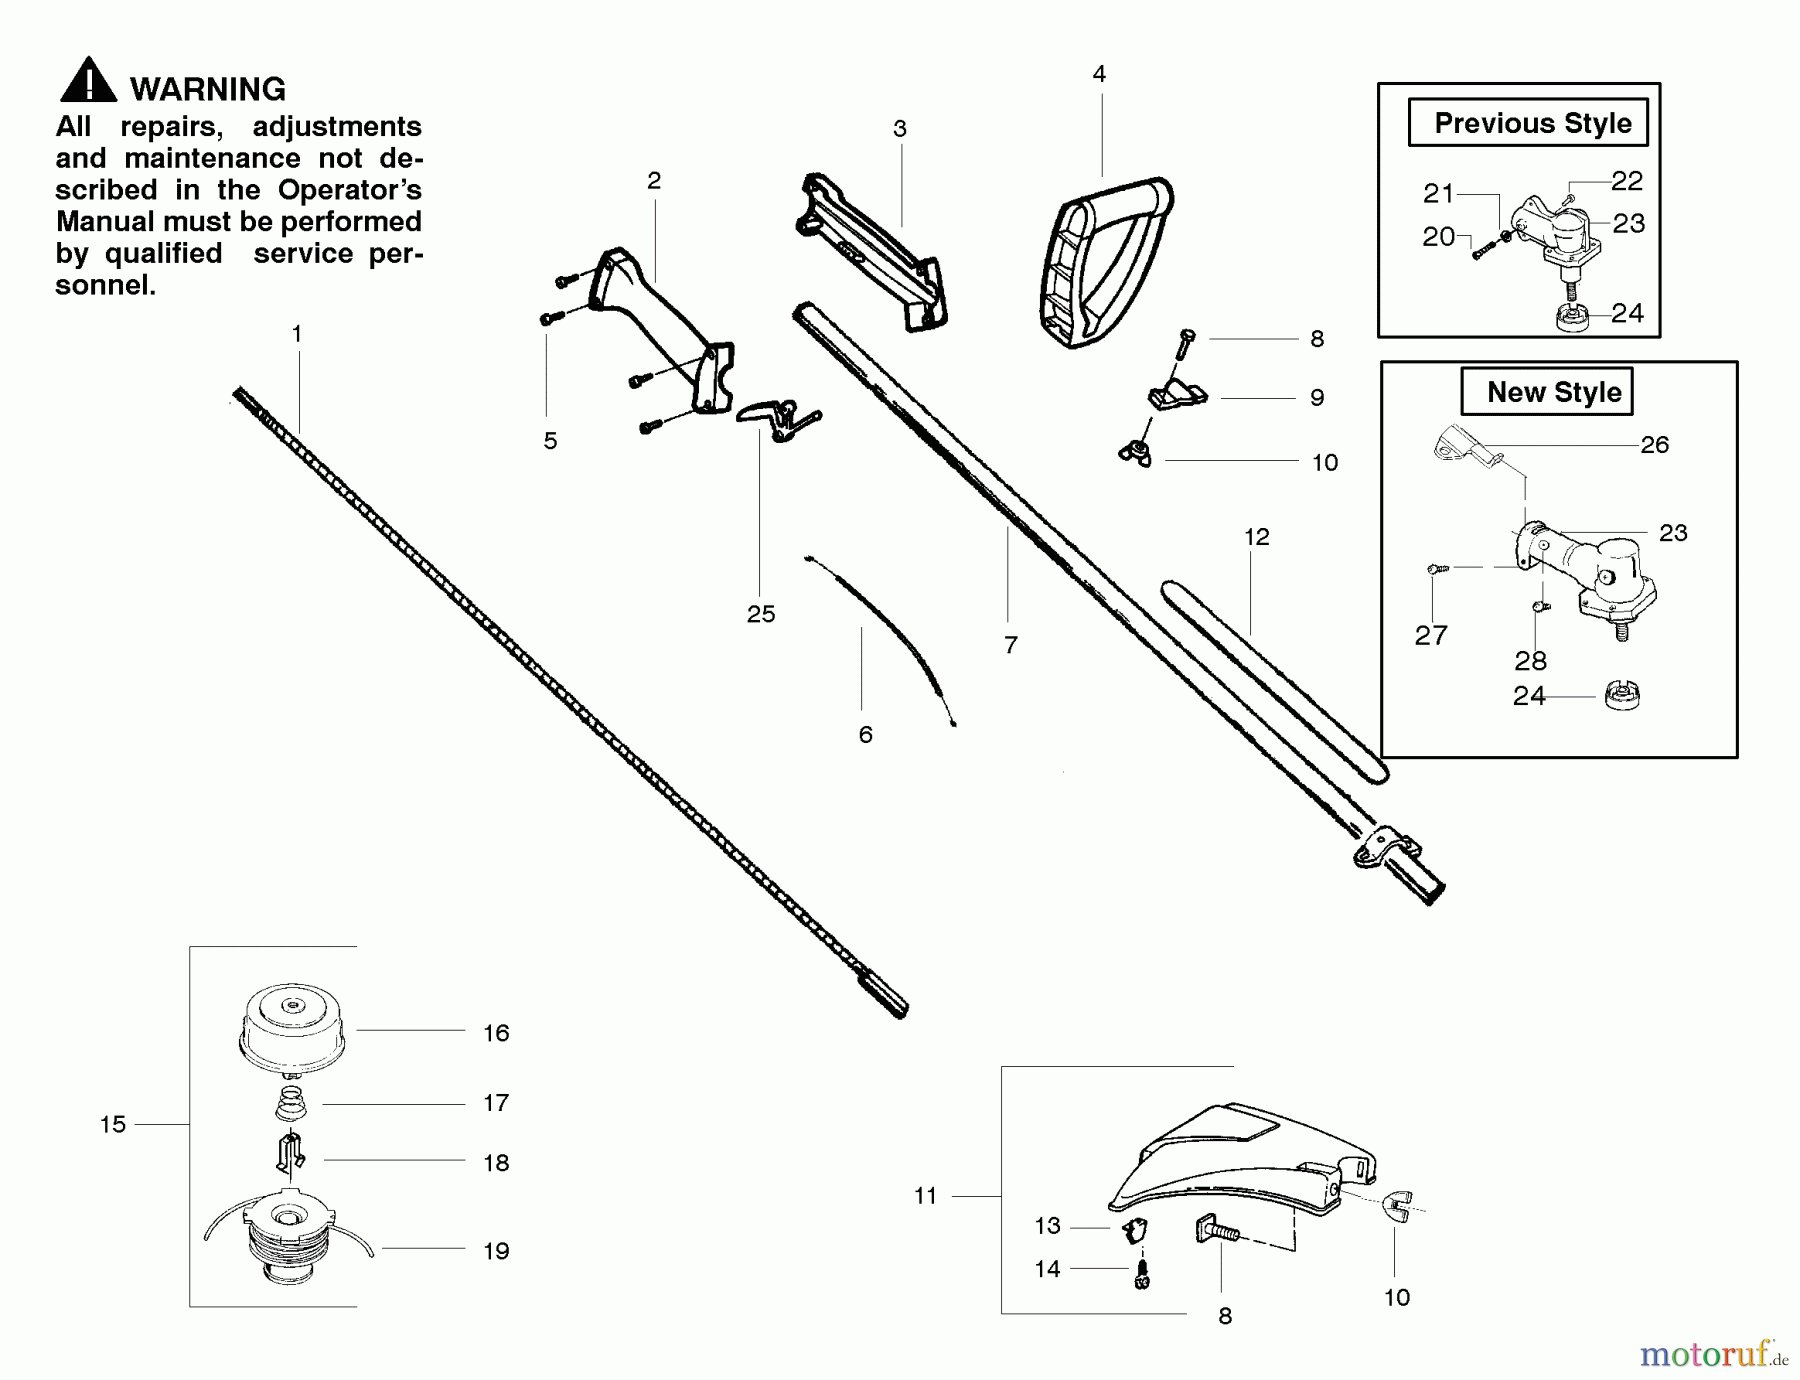  Poulan / Weed Eater Motorsensen, Trimmer XT600 (Type 1) - Weed Eater String Trimmer Handle & Shaft Assembly